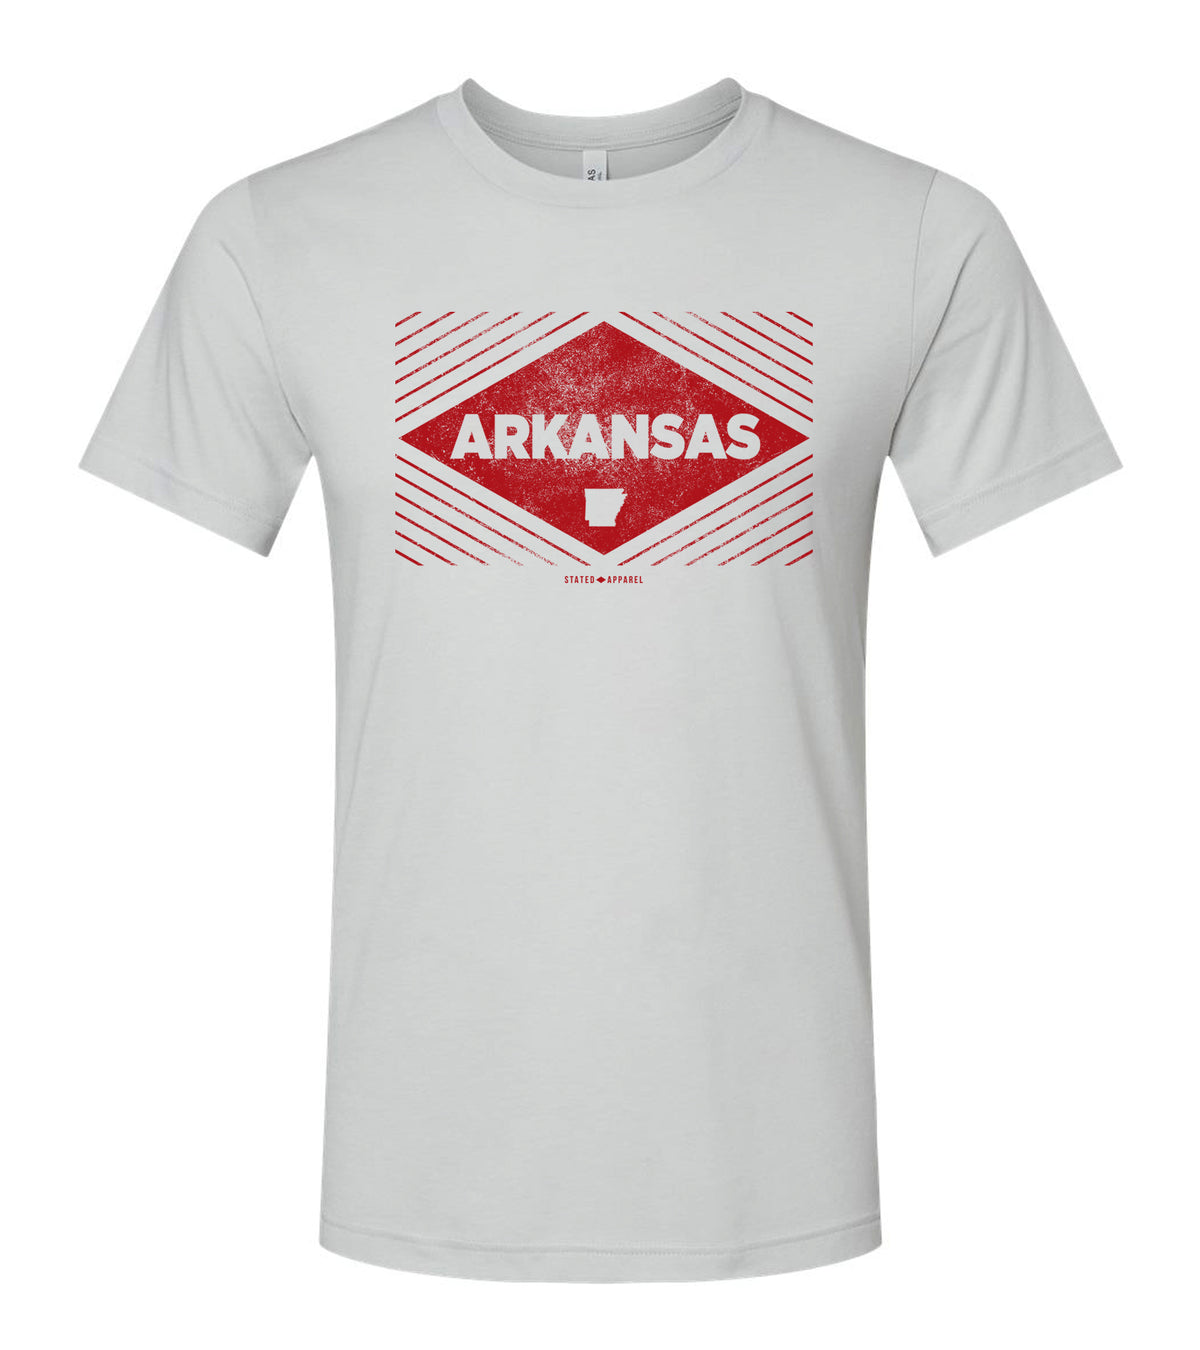 Arkansas Angles T-Shirt